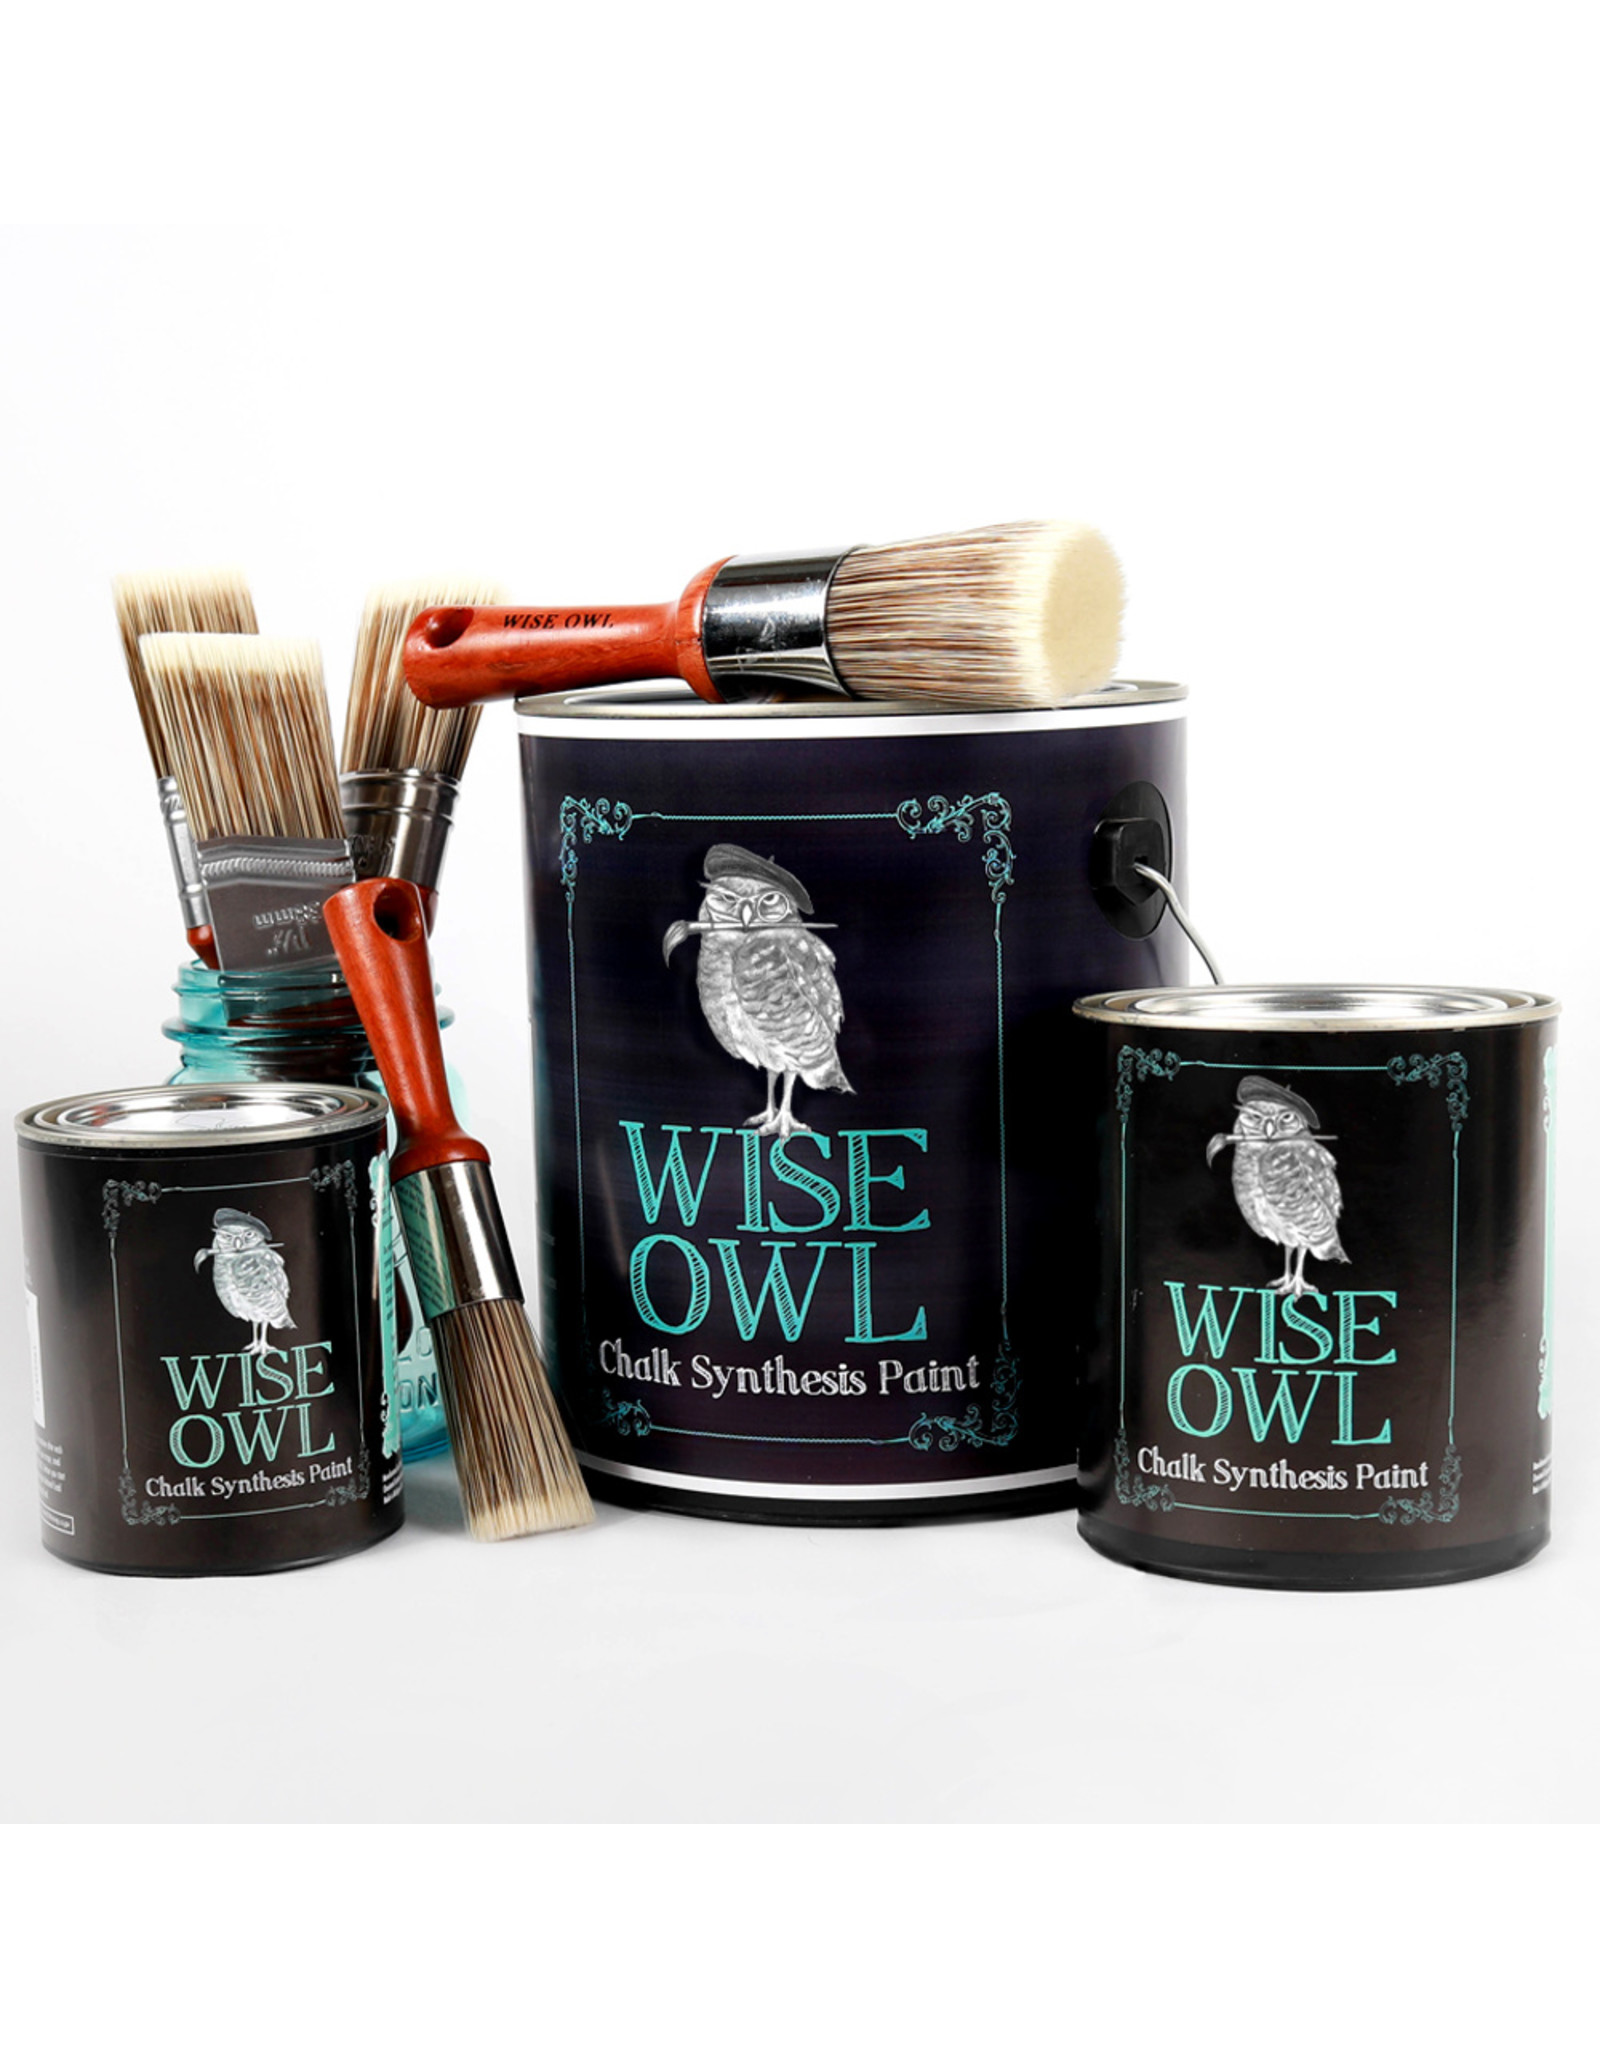 Wise Owl Paint Chalk Synthesis Paint Smokey Quartz-Pint